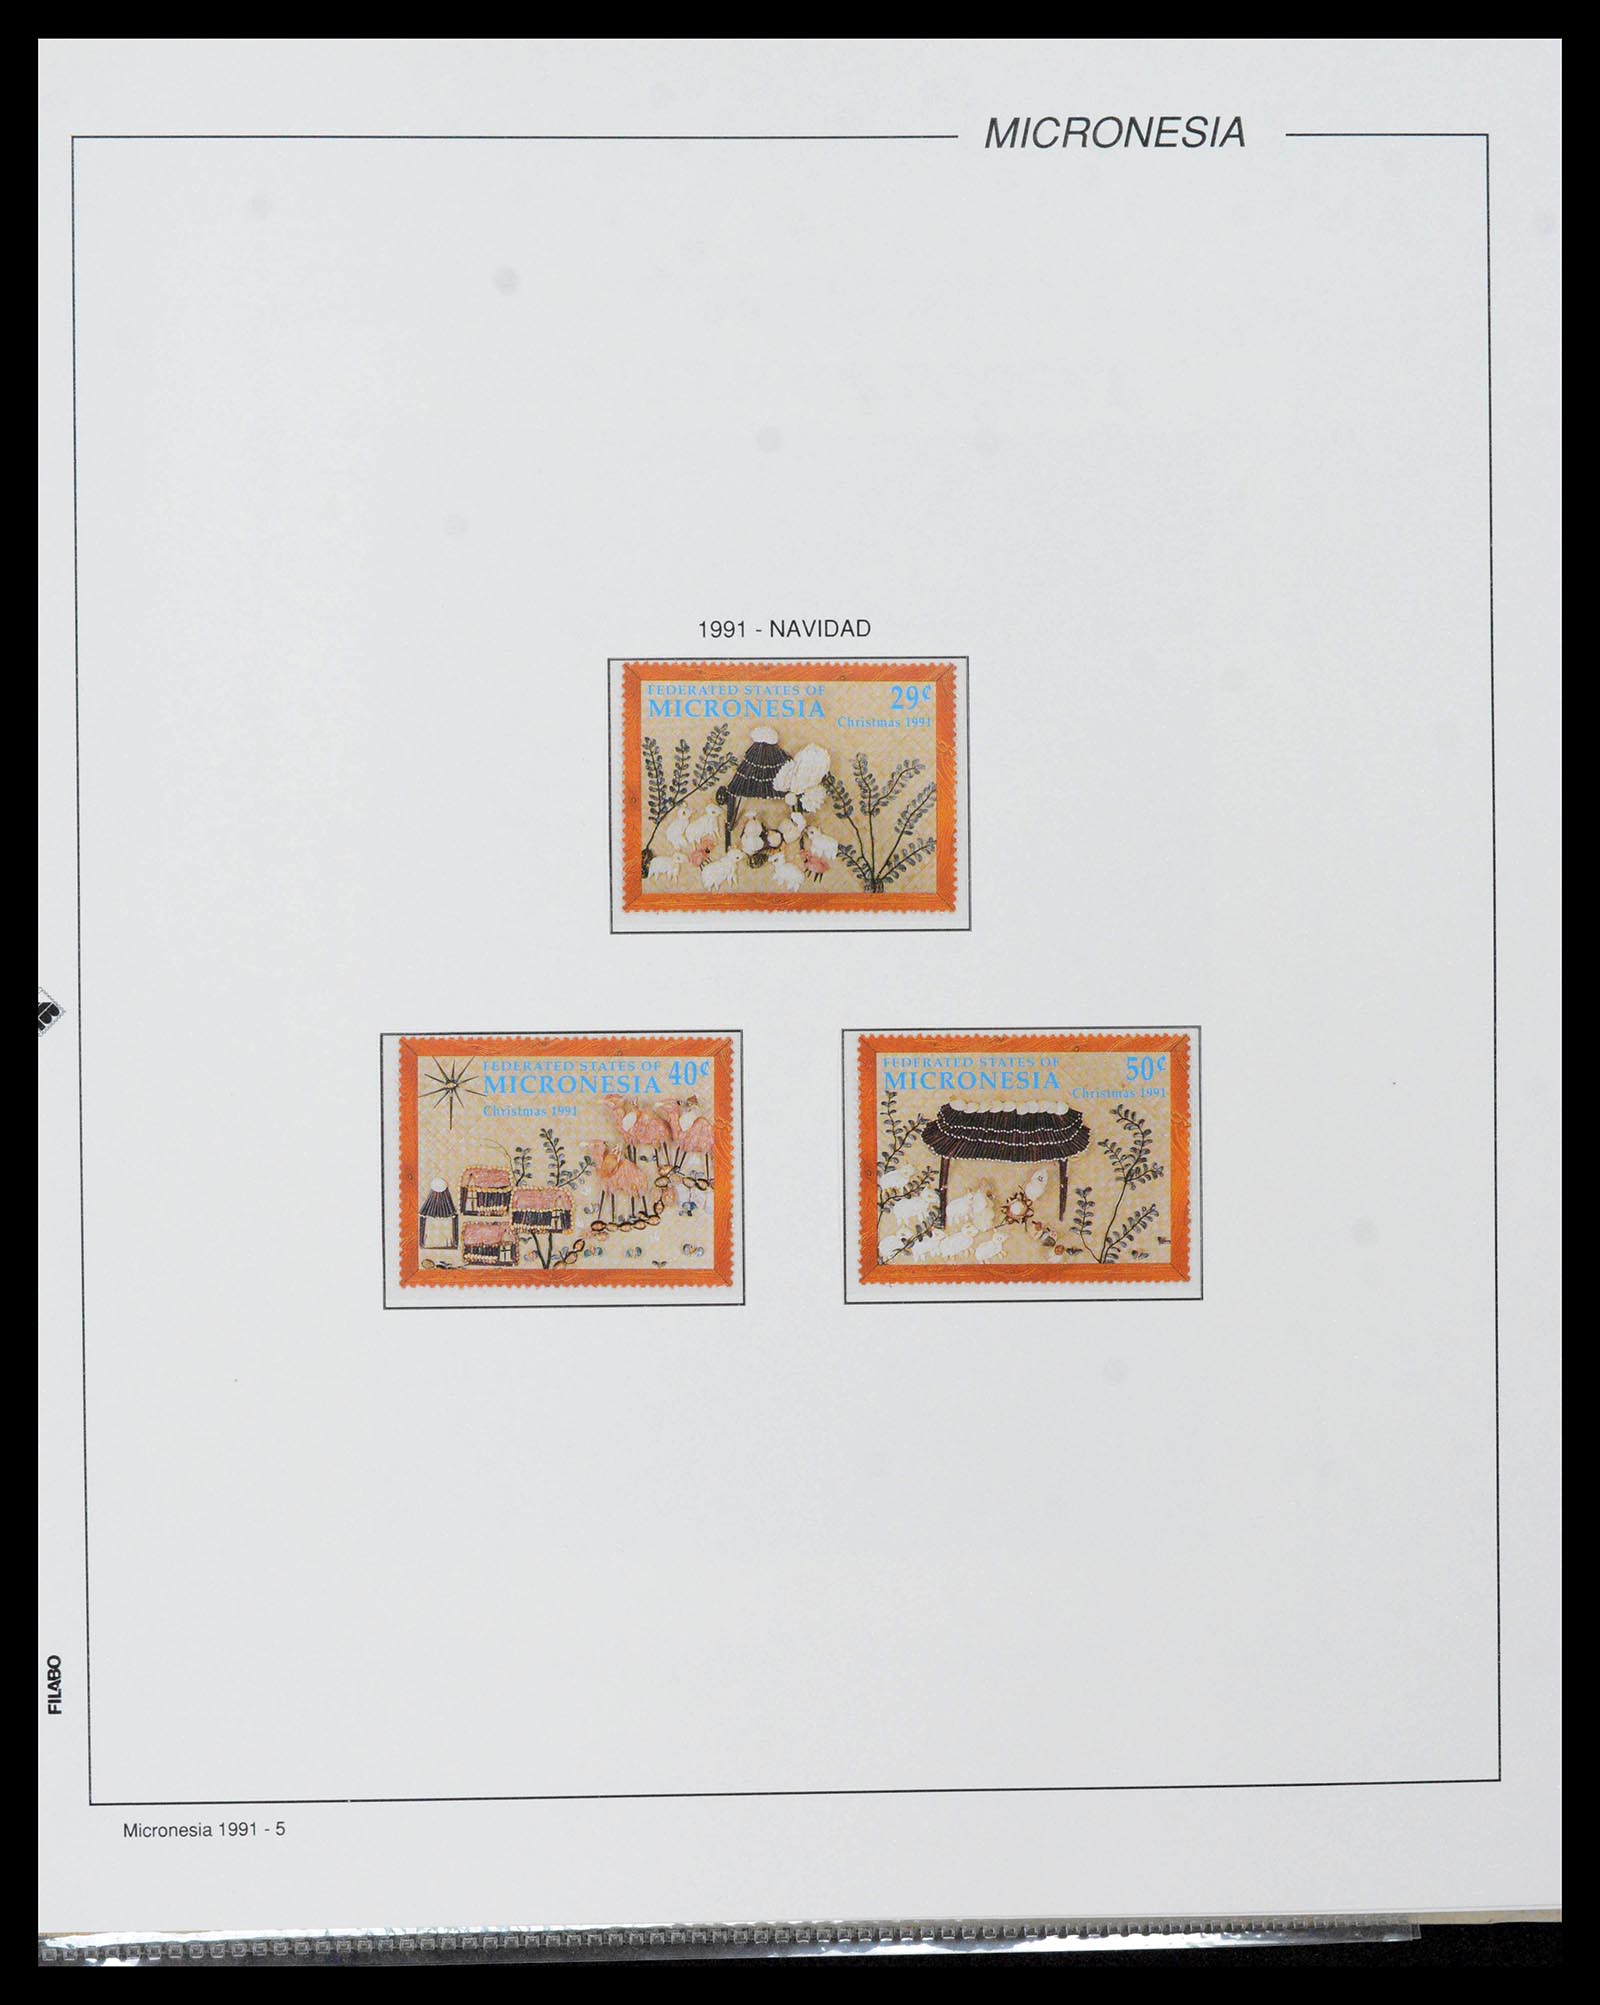 39222 0095 - Stamp collection 39222 Palau, Micronesia and Marshall islands 1980-1995.